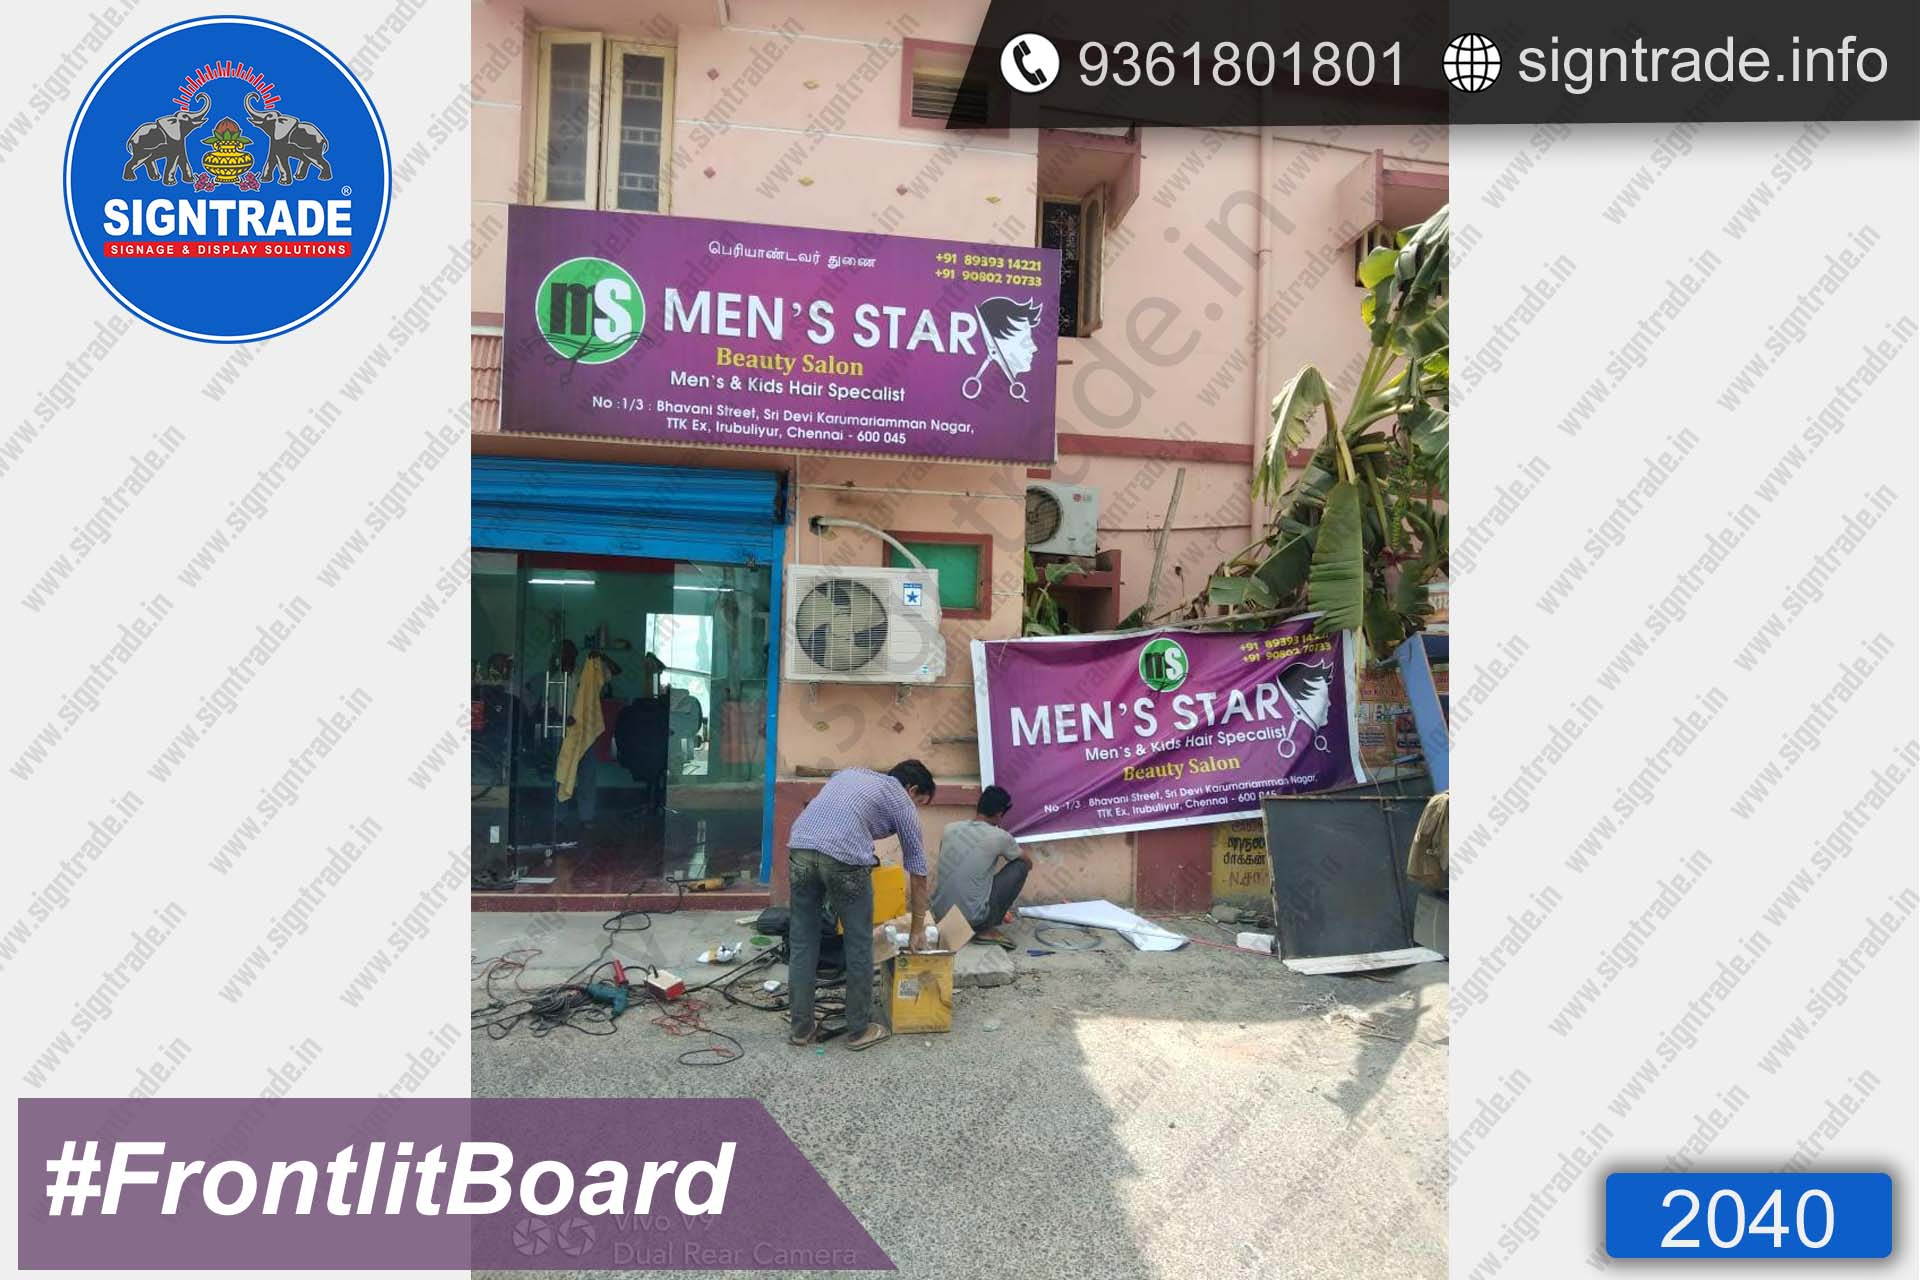 Men's Star Frontlit Board